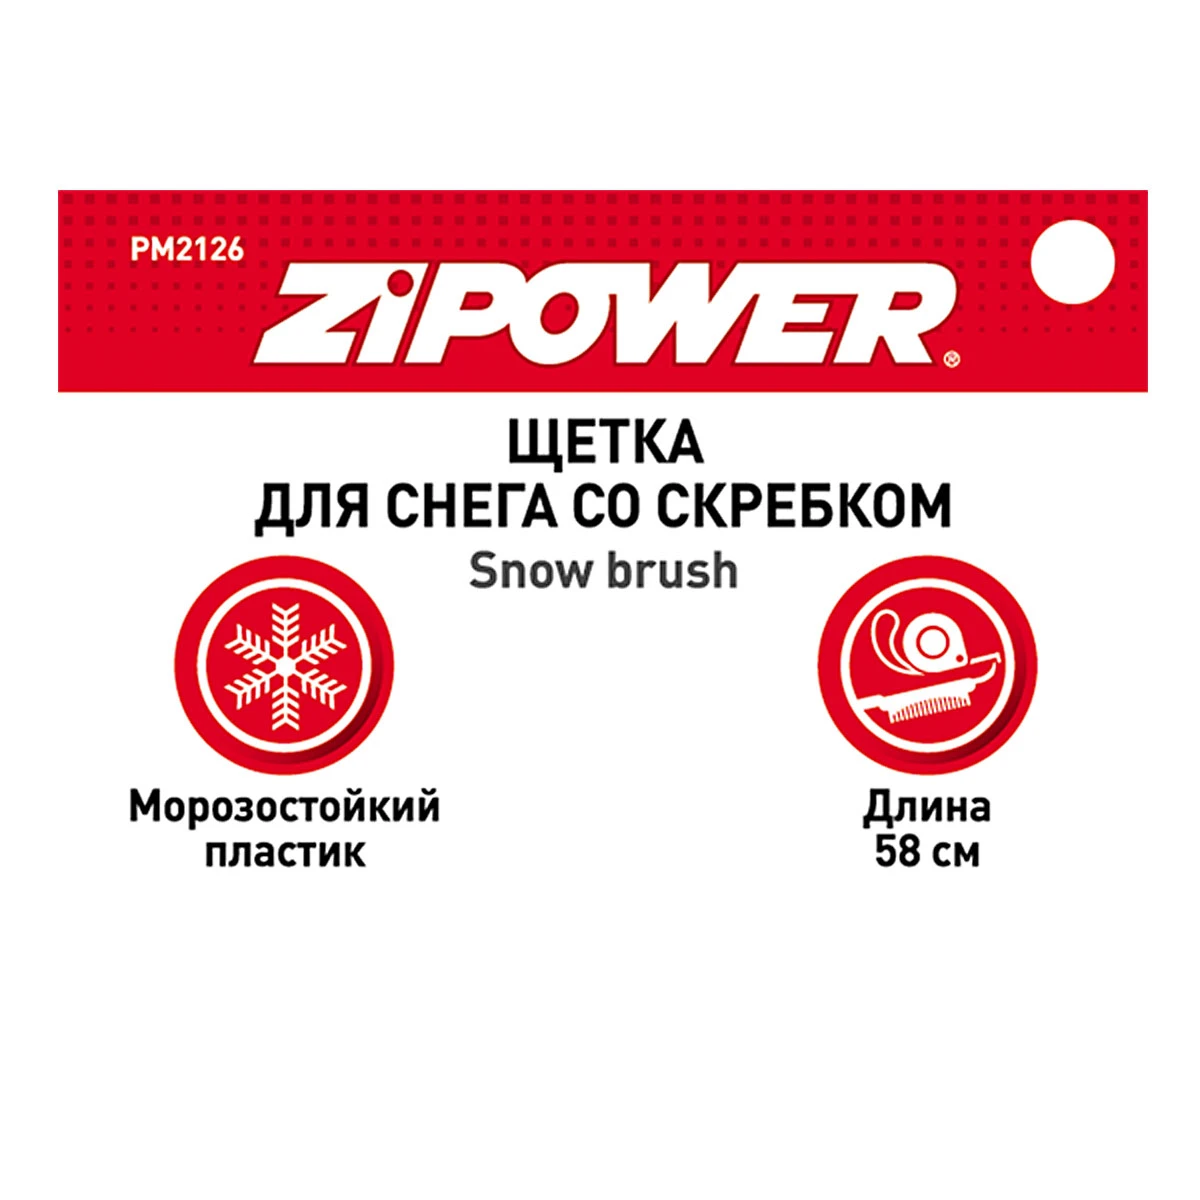 PM2126 ZIPOWER Щетка для снега щетка-скребок для снега и льда, 58 см (фото 4)